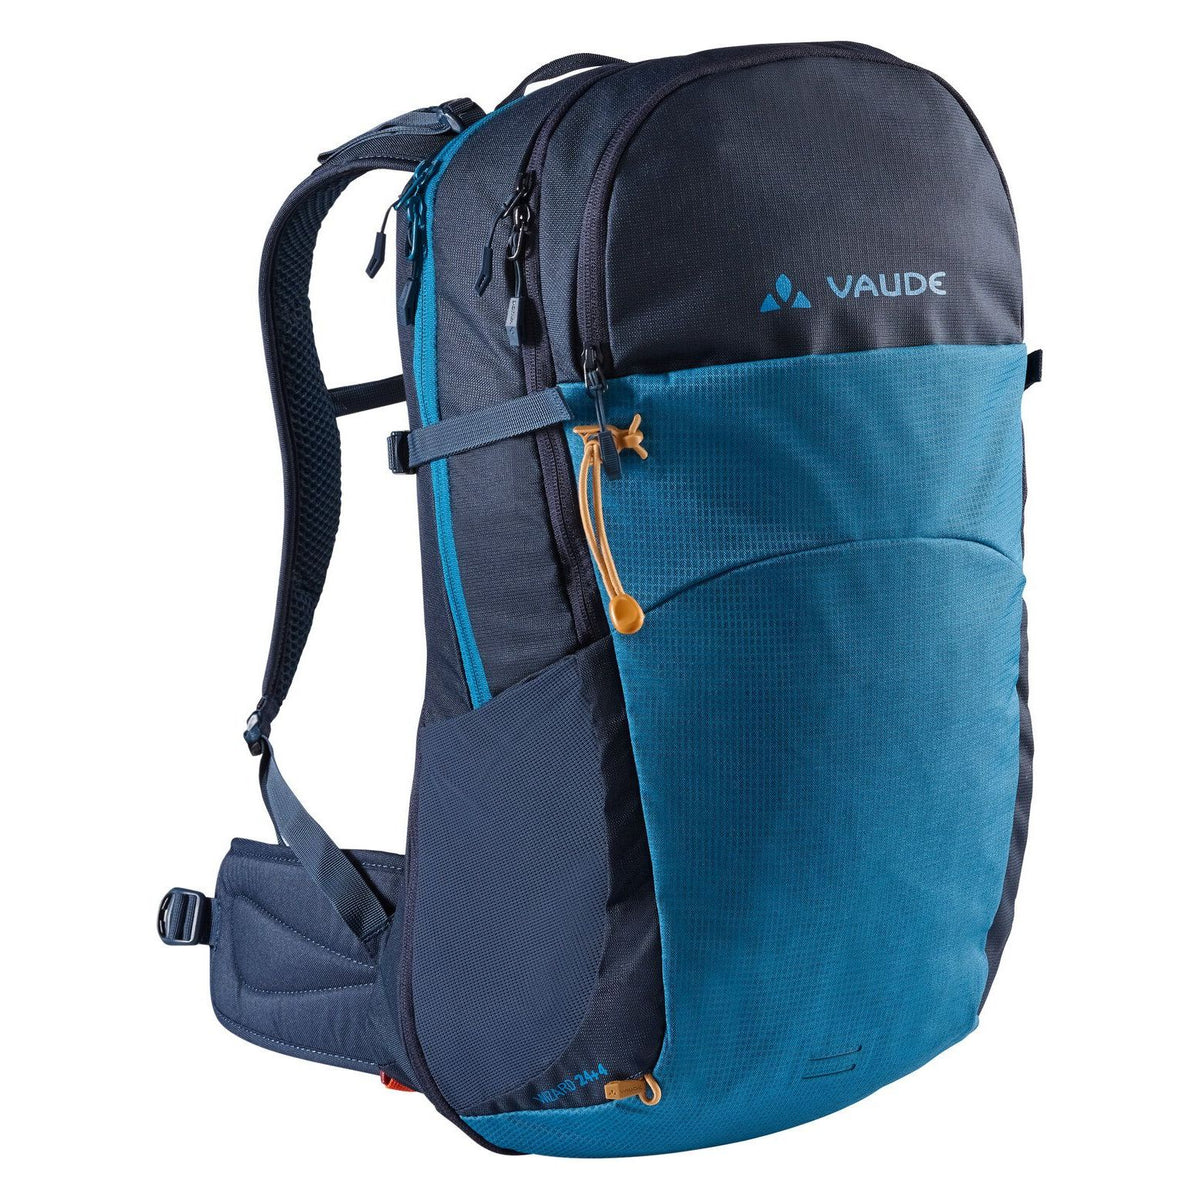 Vaude Wizard 24+4 Hiking Backpack - Kingfisher Blue